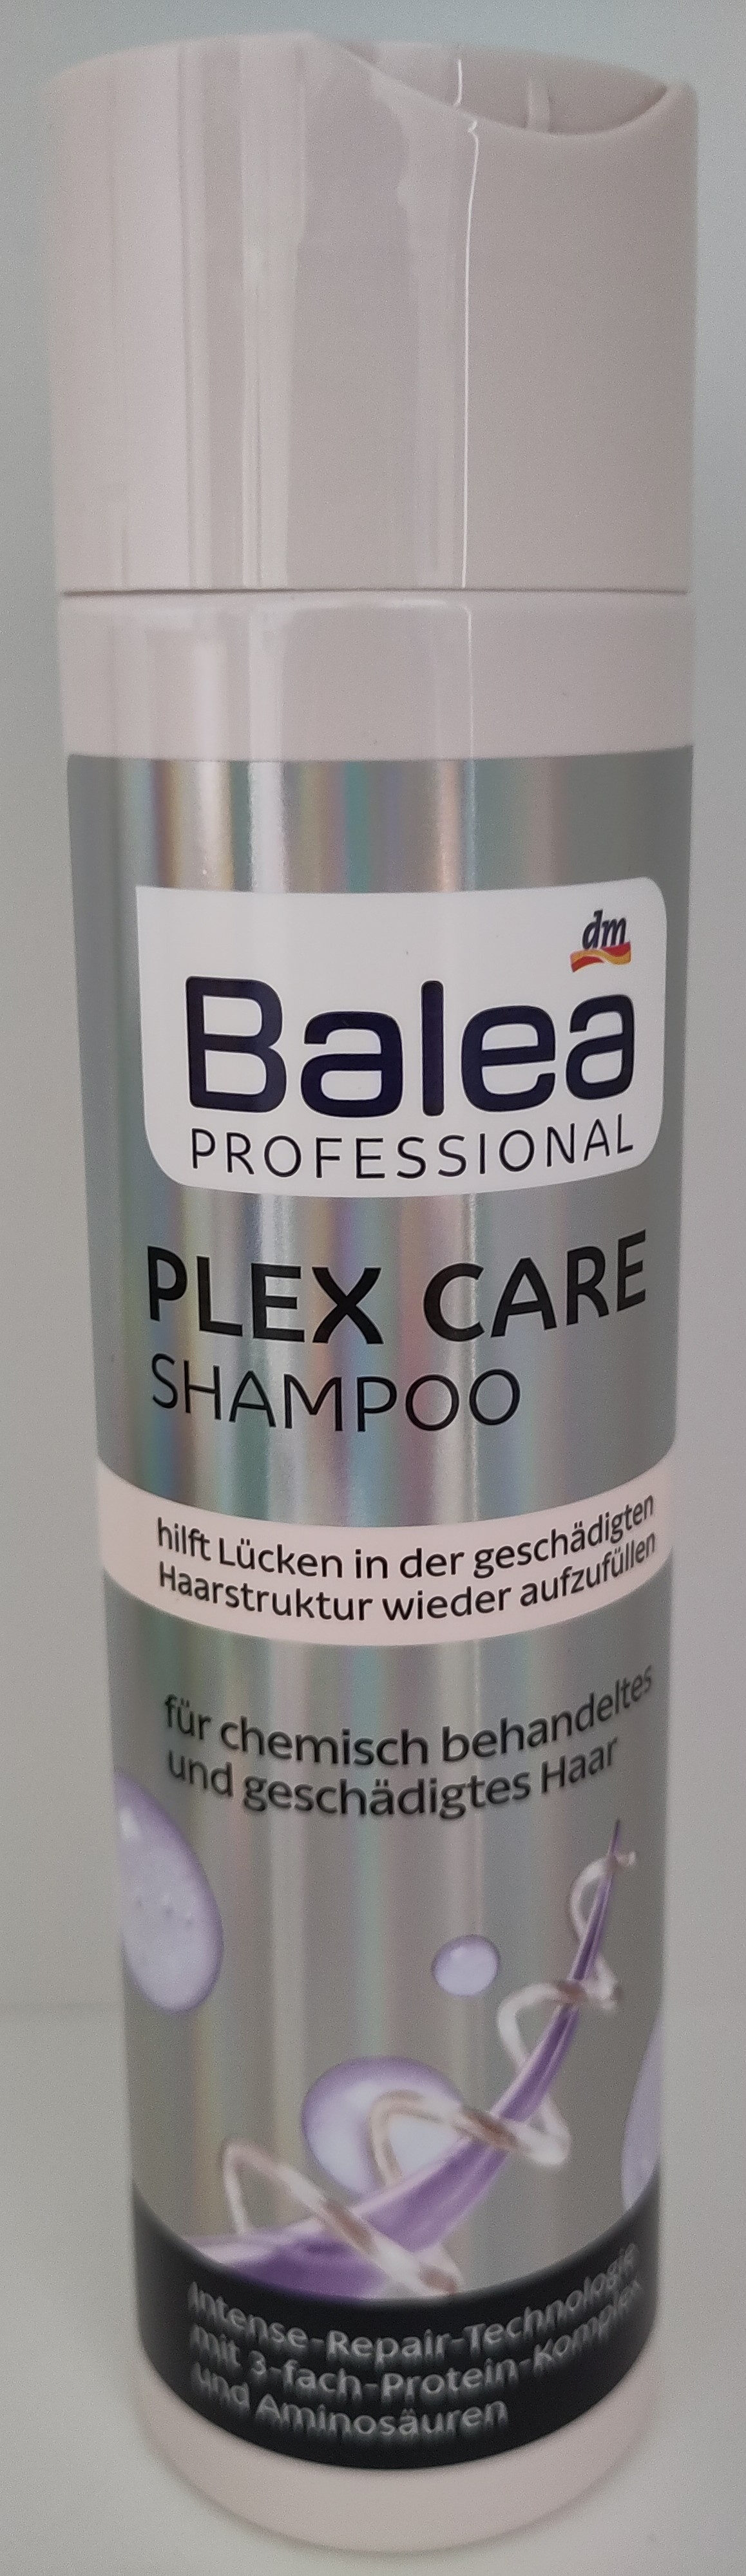 Plex Care Shampoo - Produit - de